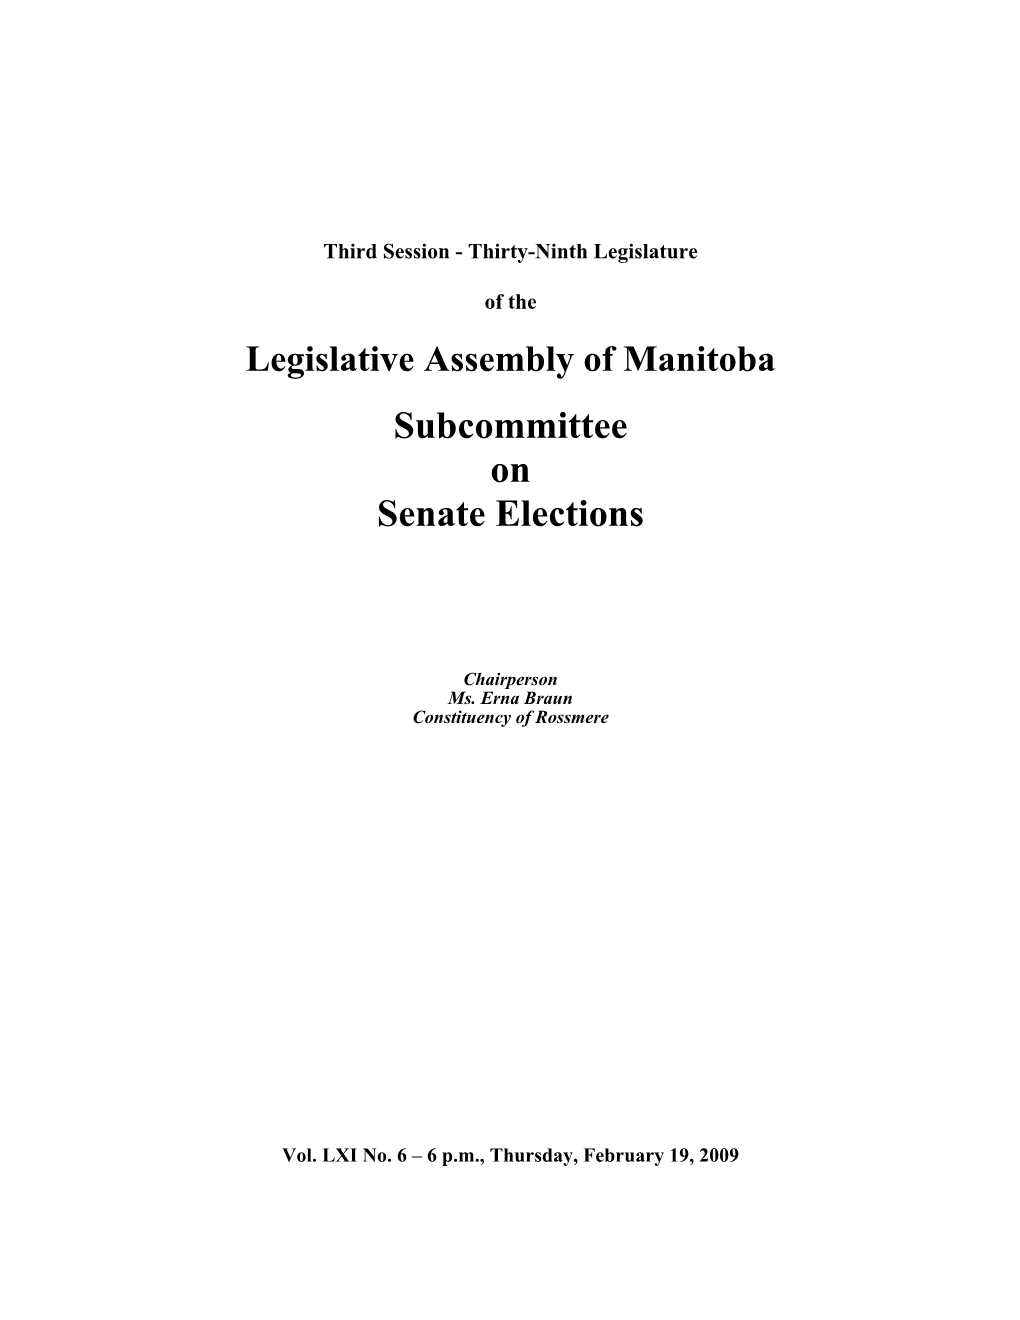 39Th Legislature, Senate Elections 6, Feb 19, 2009